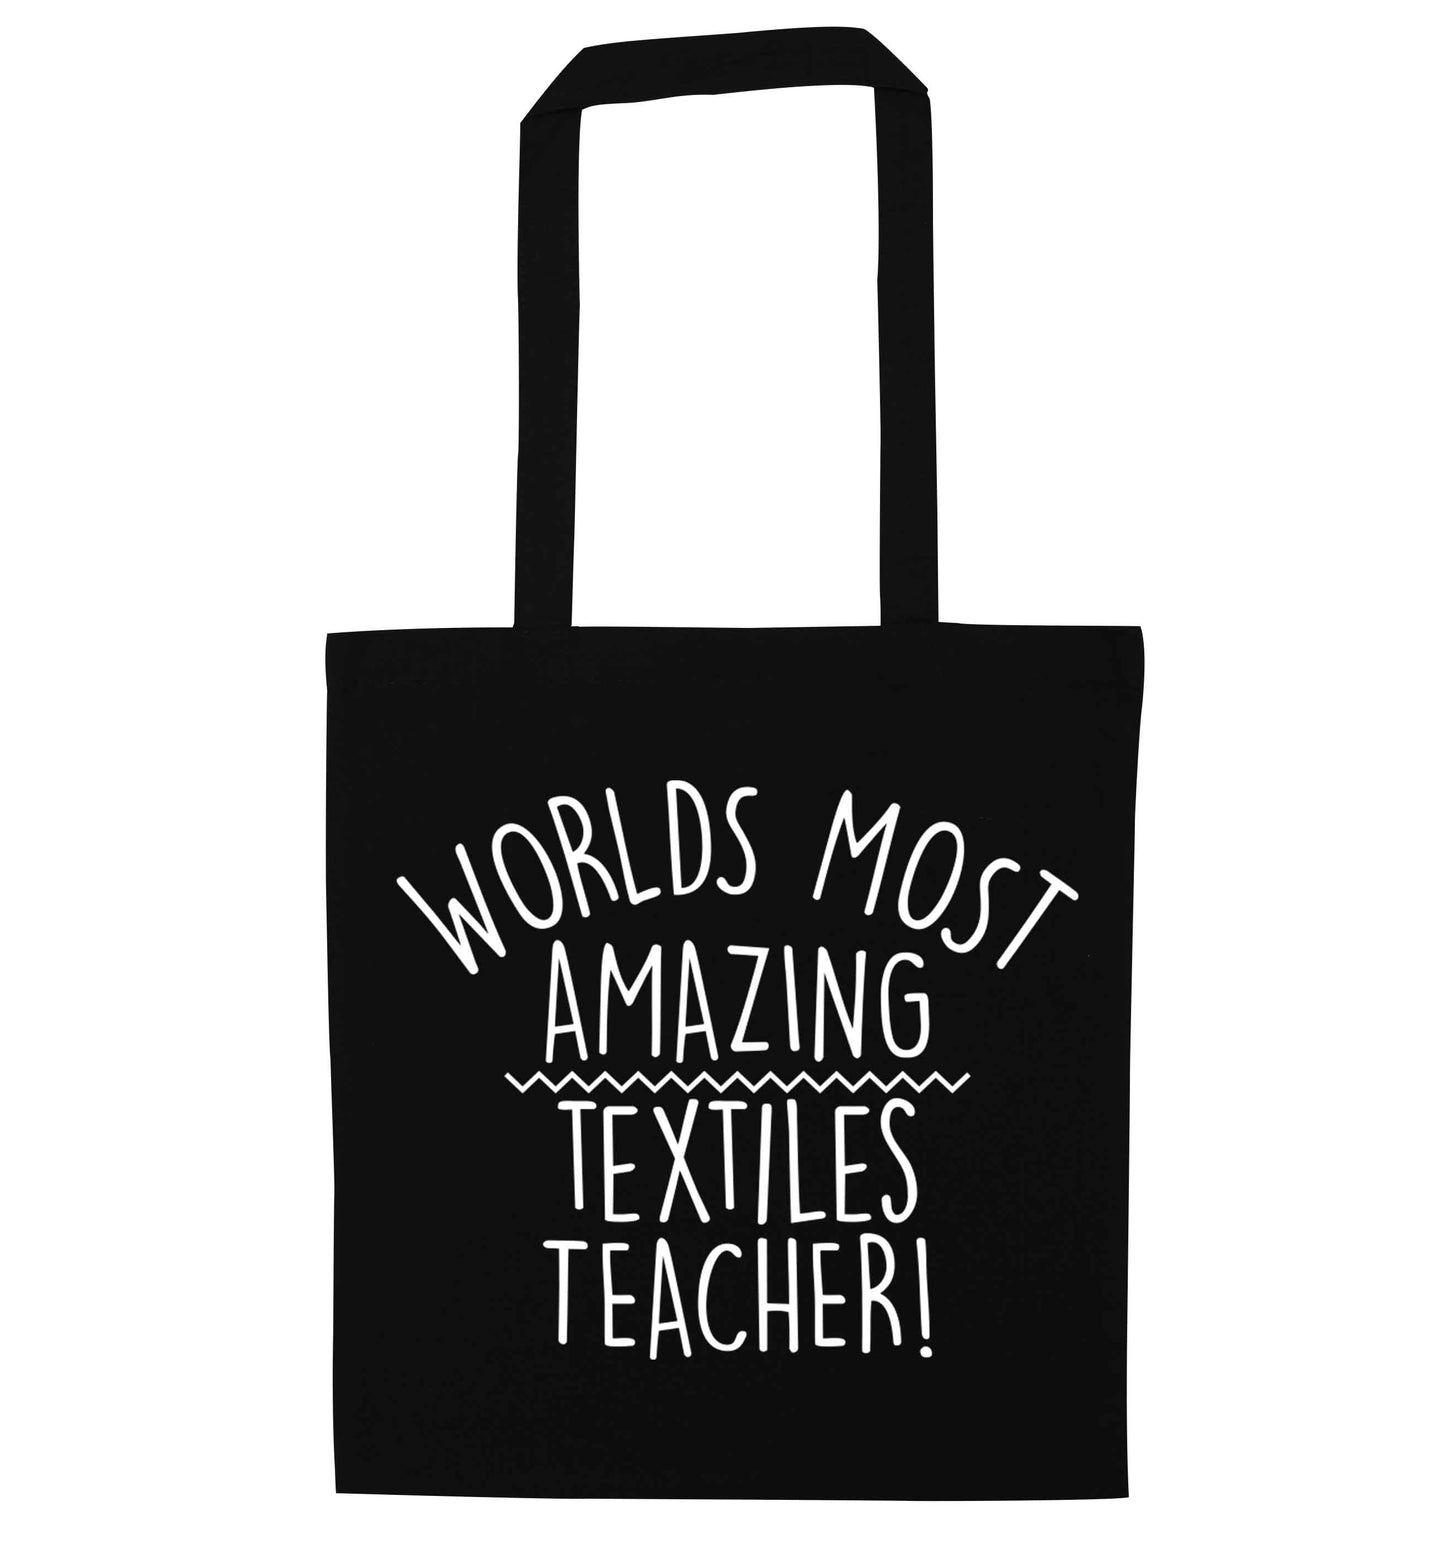 Worlds most amazing textiles teacher black tote bag